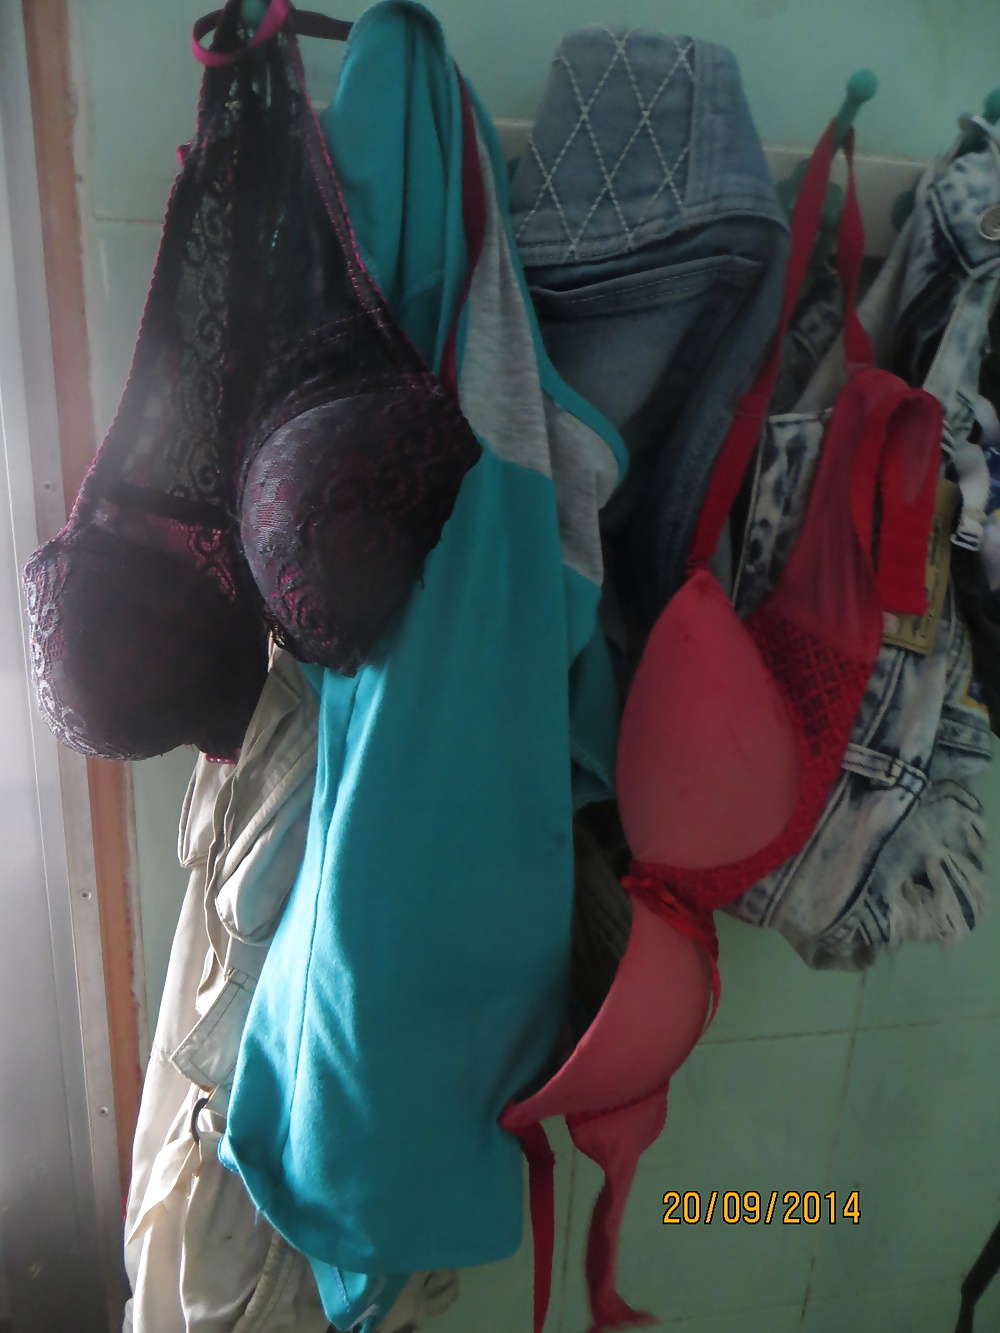 XXX Dirty panties & bras of my older cousin 20-09-2014